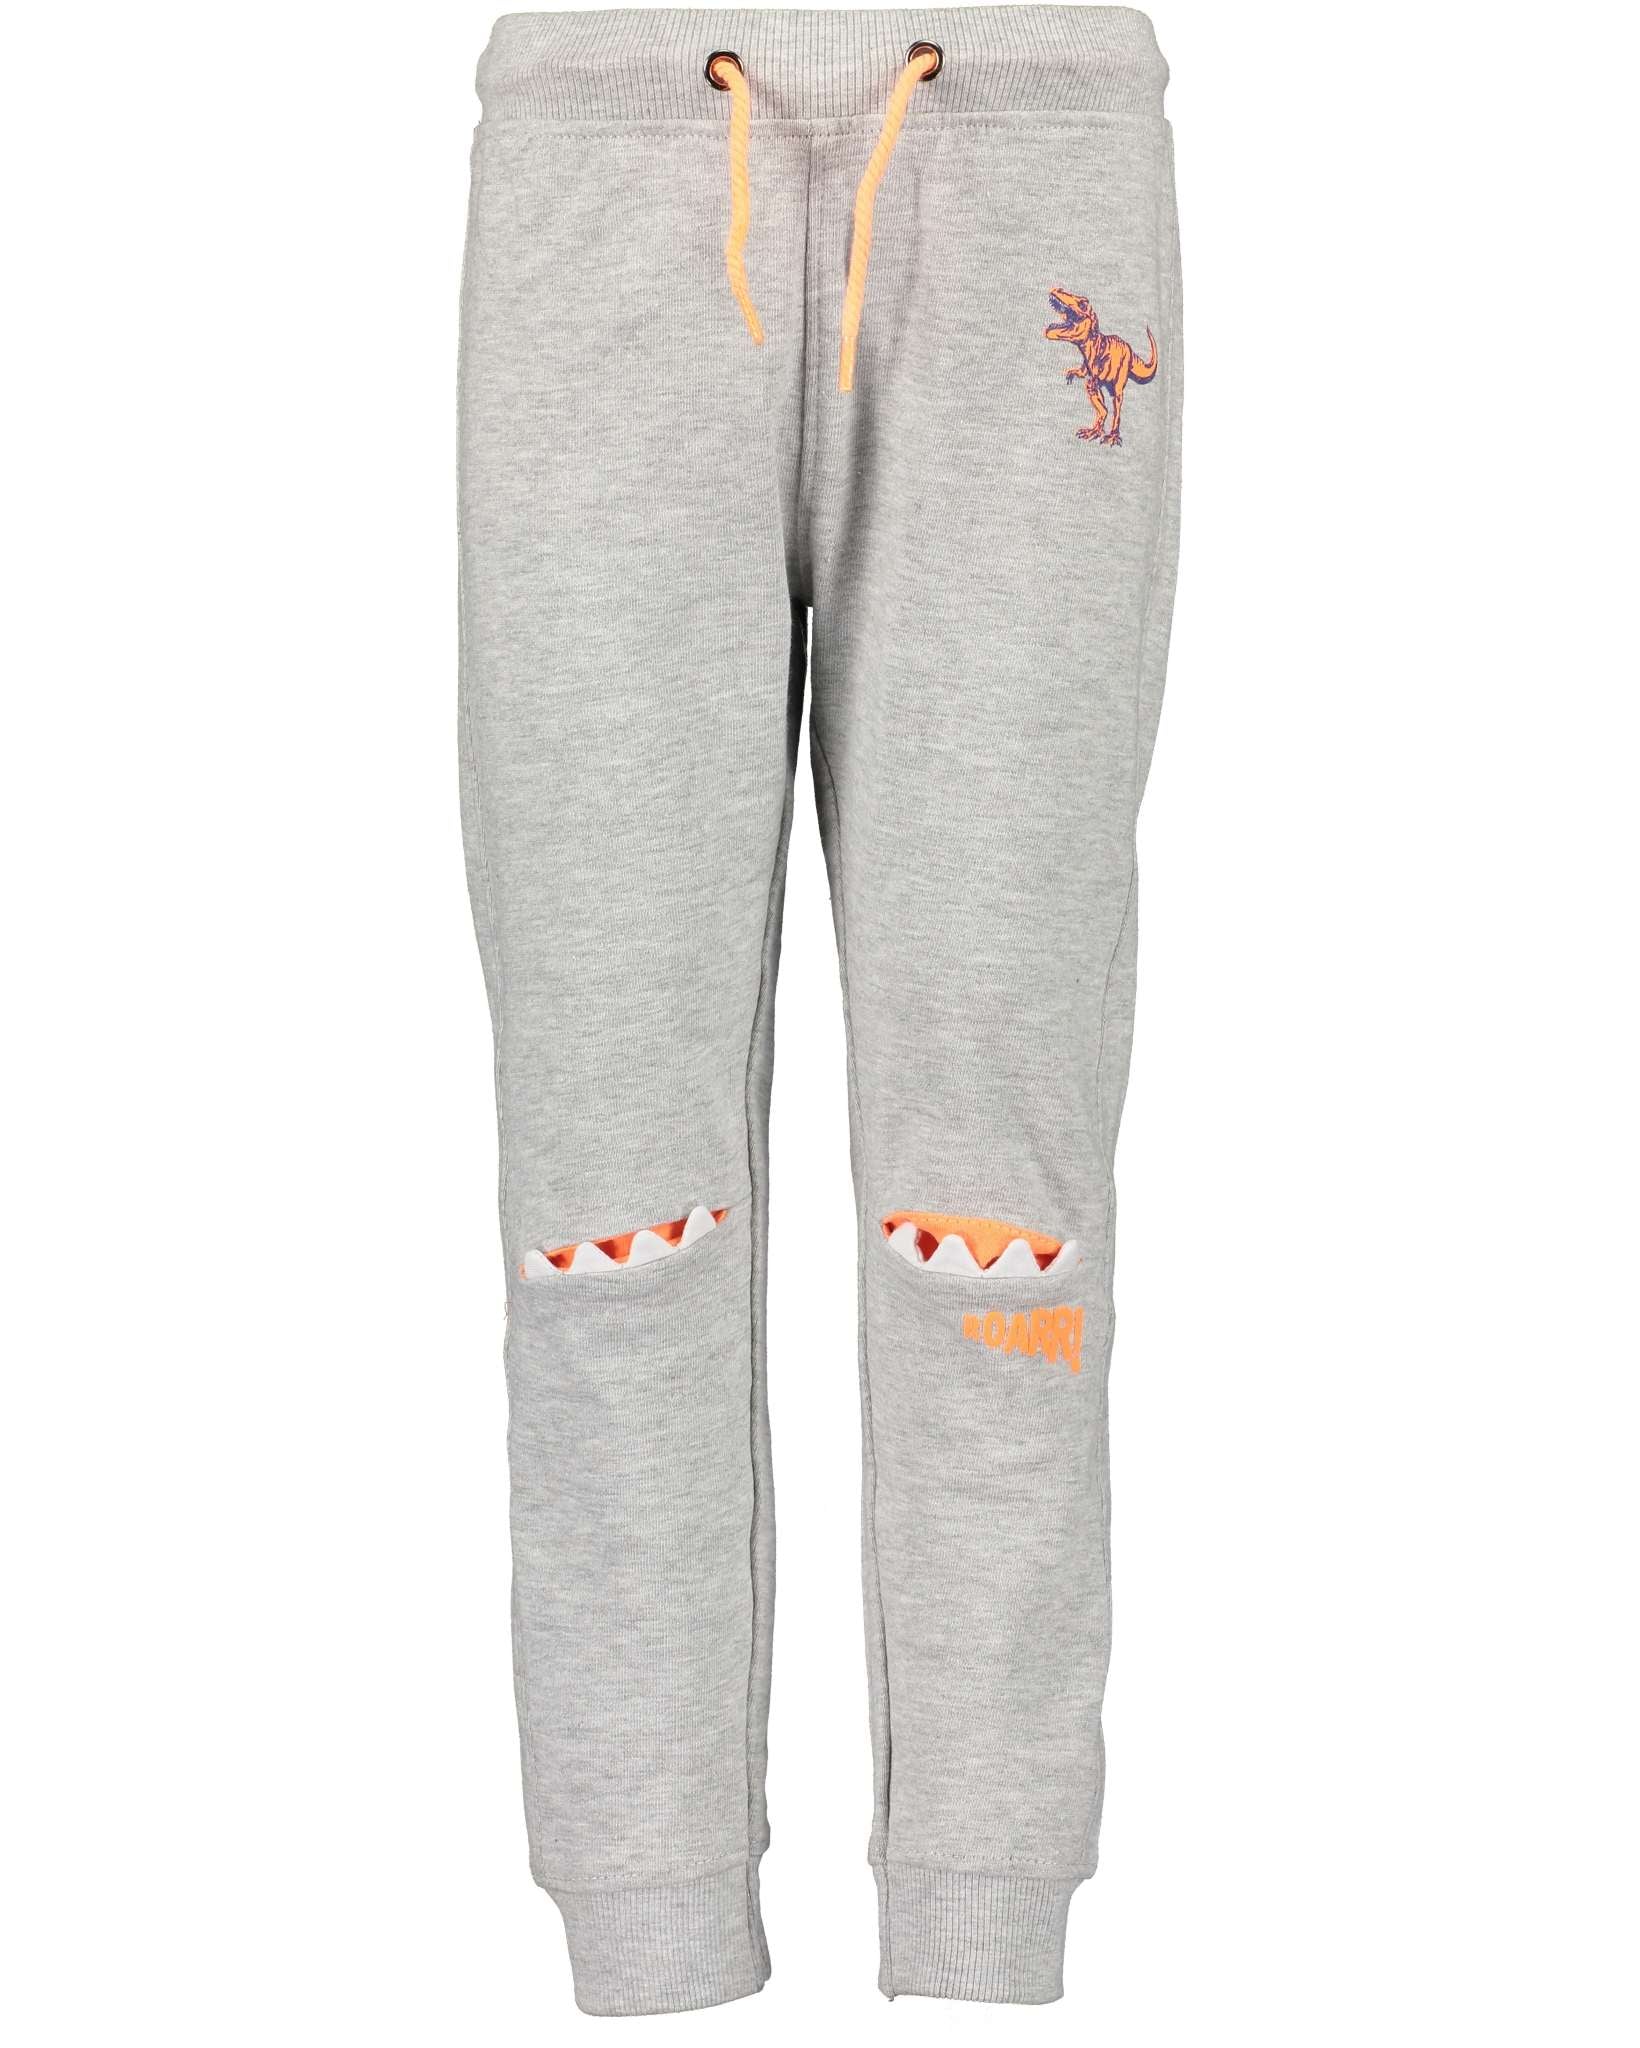 Boys Marl Grey Dinosaur Jogging Trousers - Nana B Baby & Childrenswear Boutique